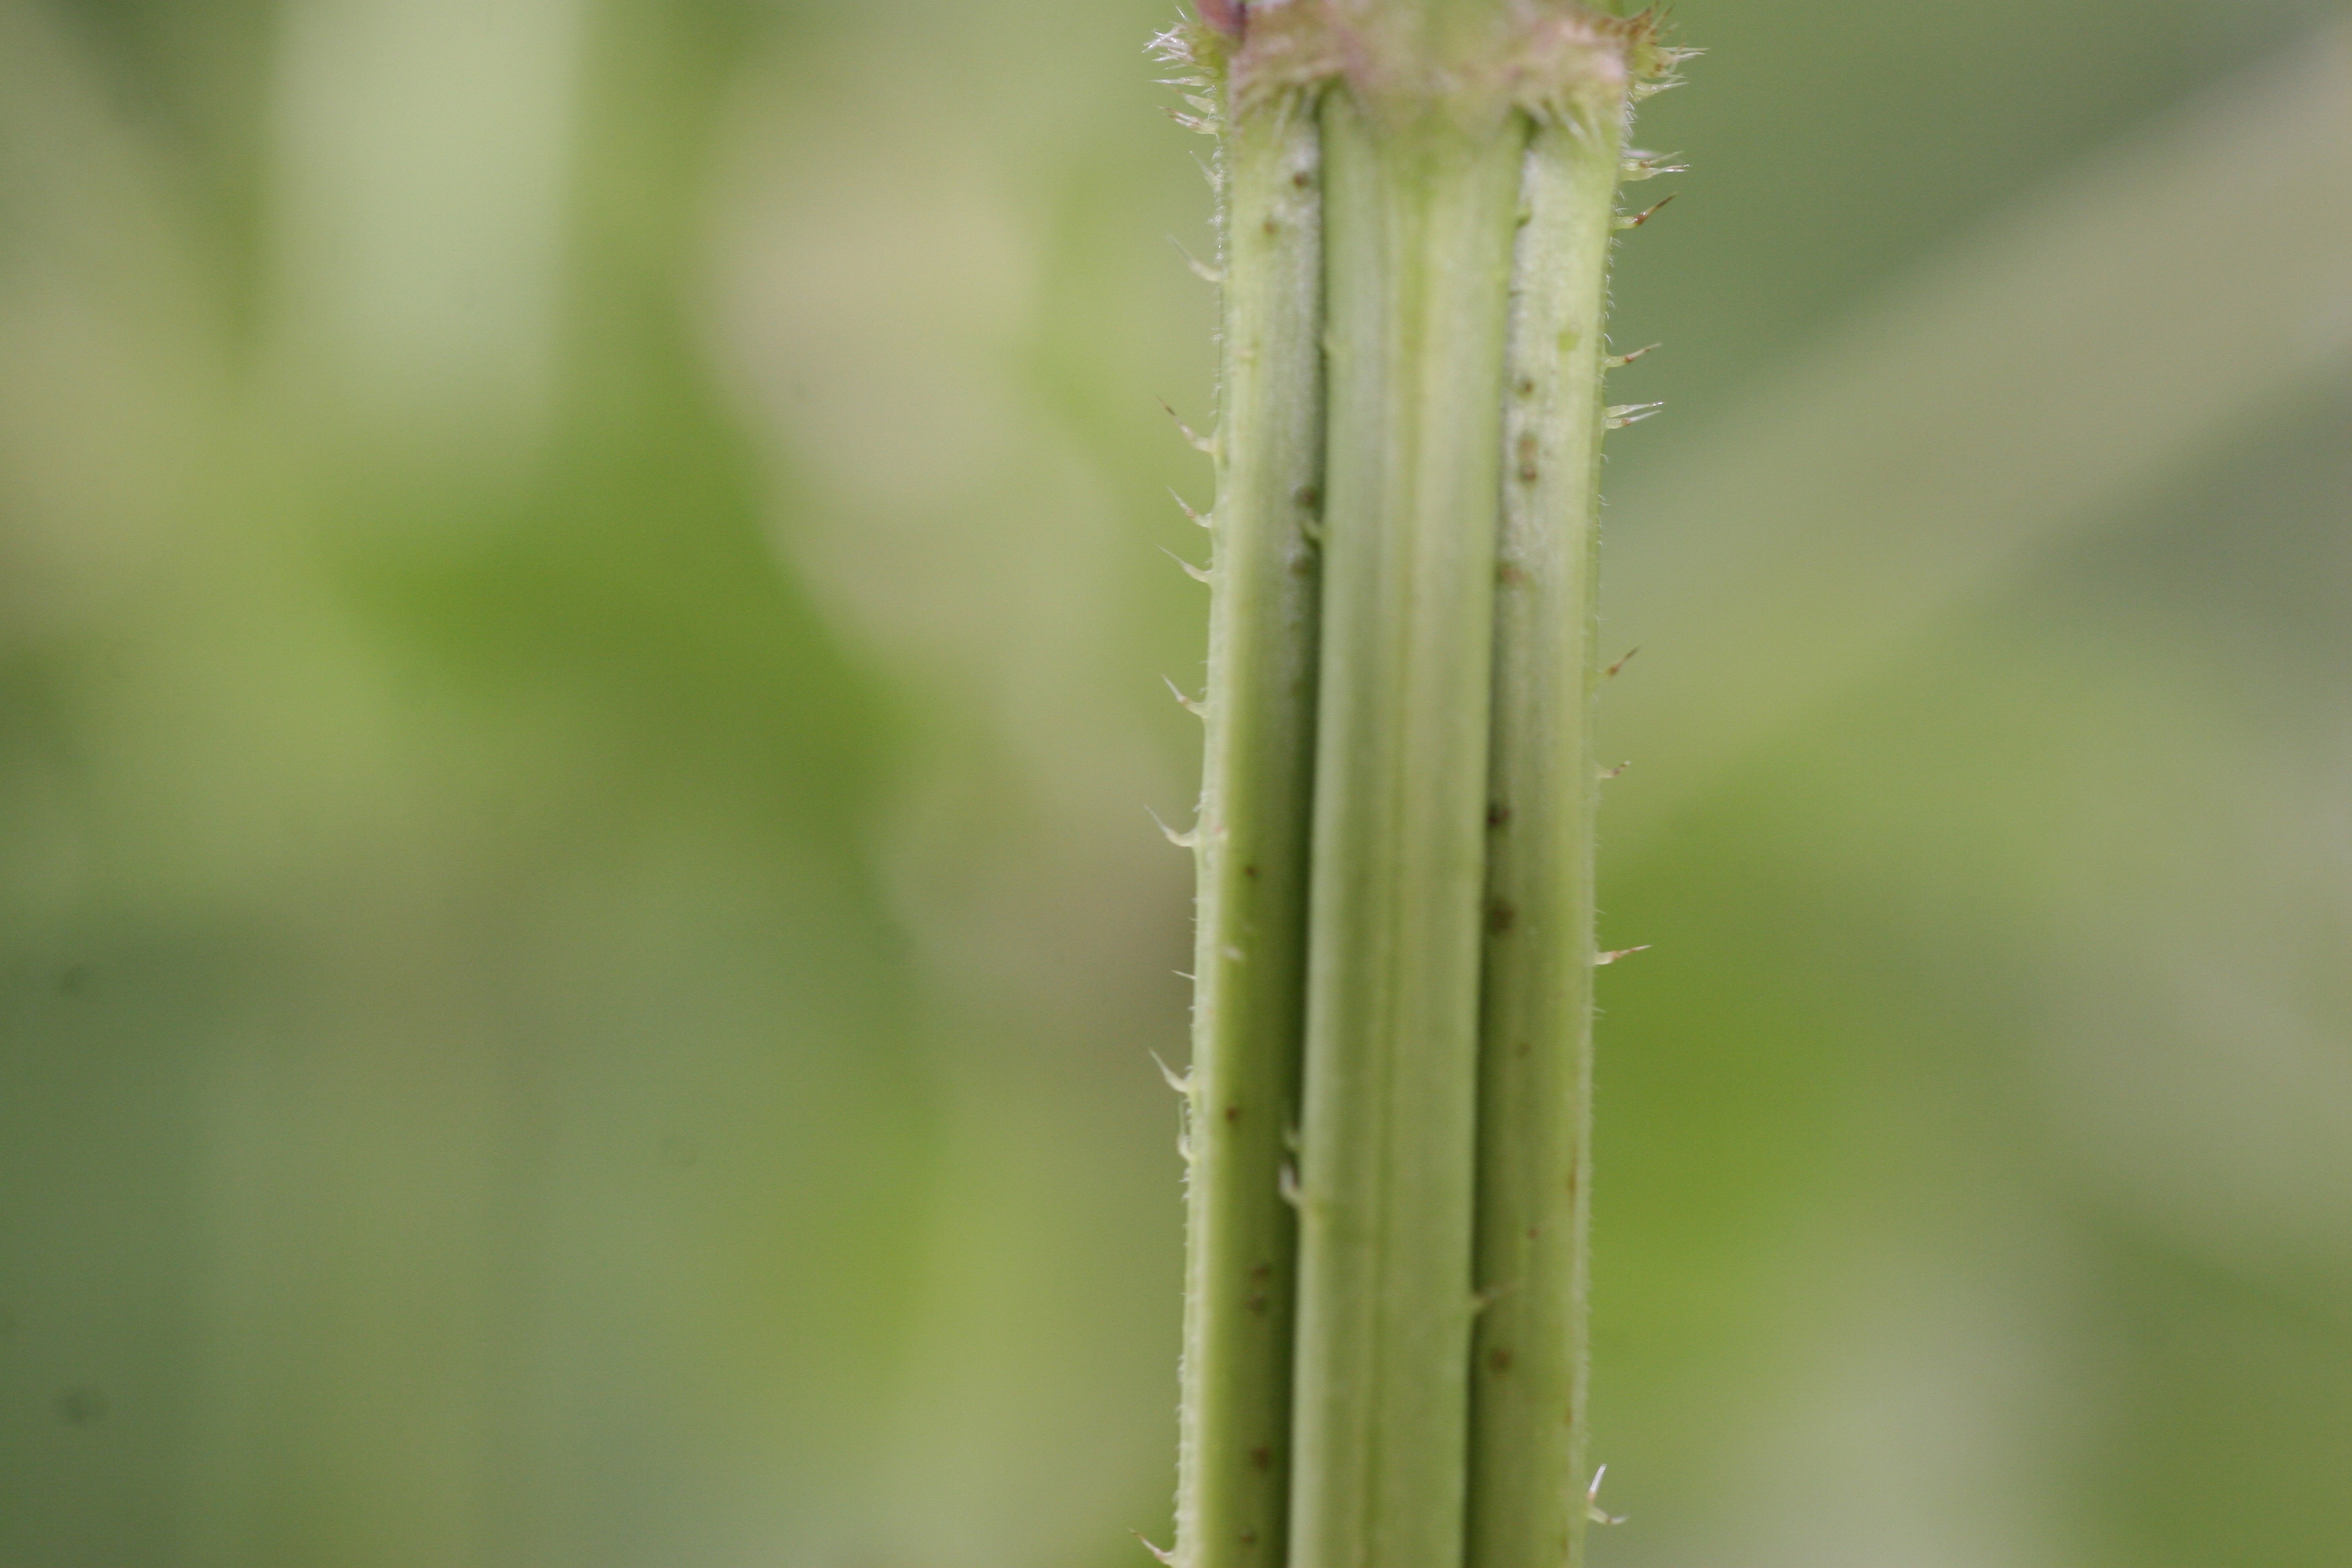 Stinging nettle – Urtica dioica - Plant & Pest Diagnostics